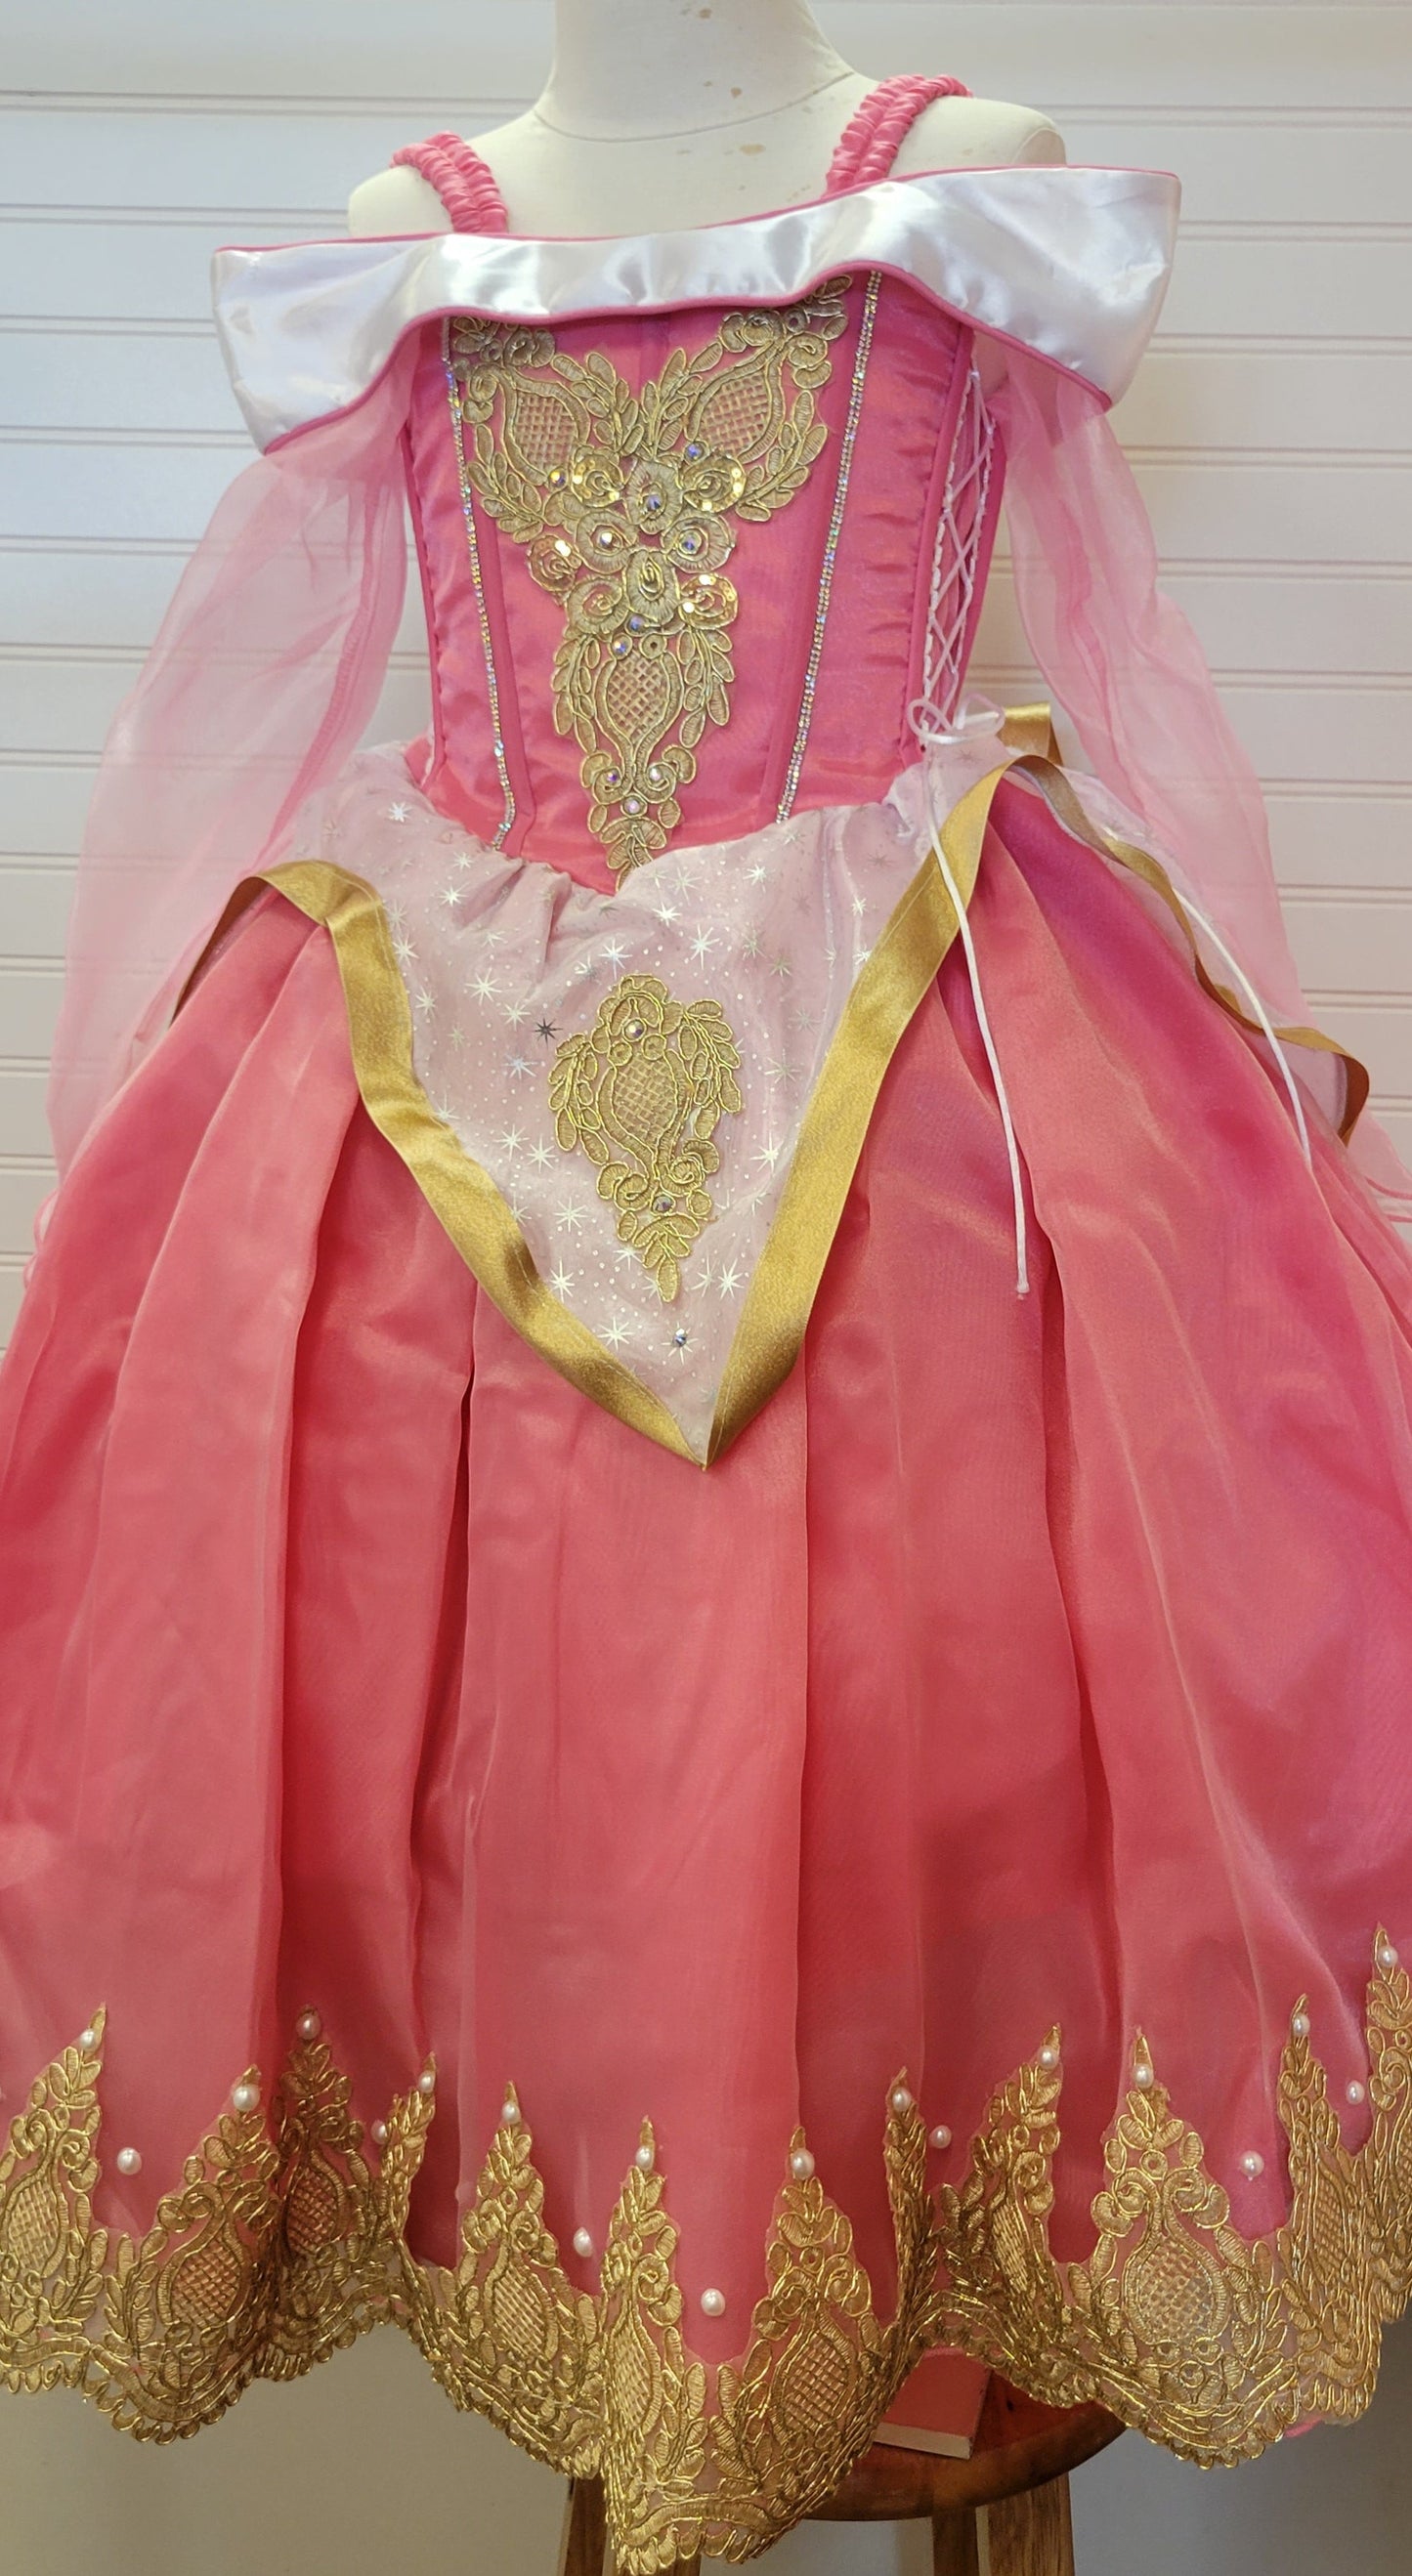 Princess Dress, Aurora Dress Inspired,